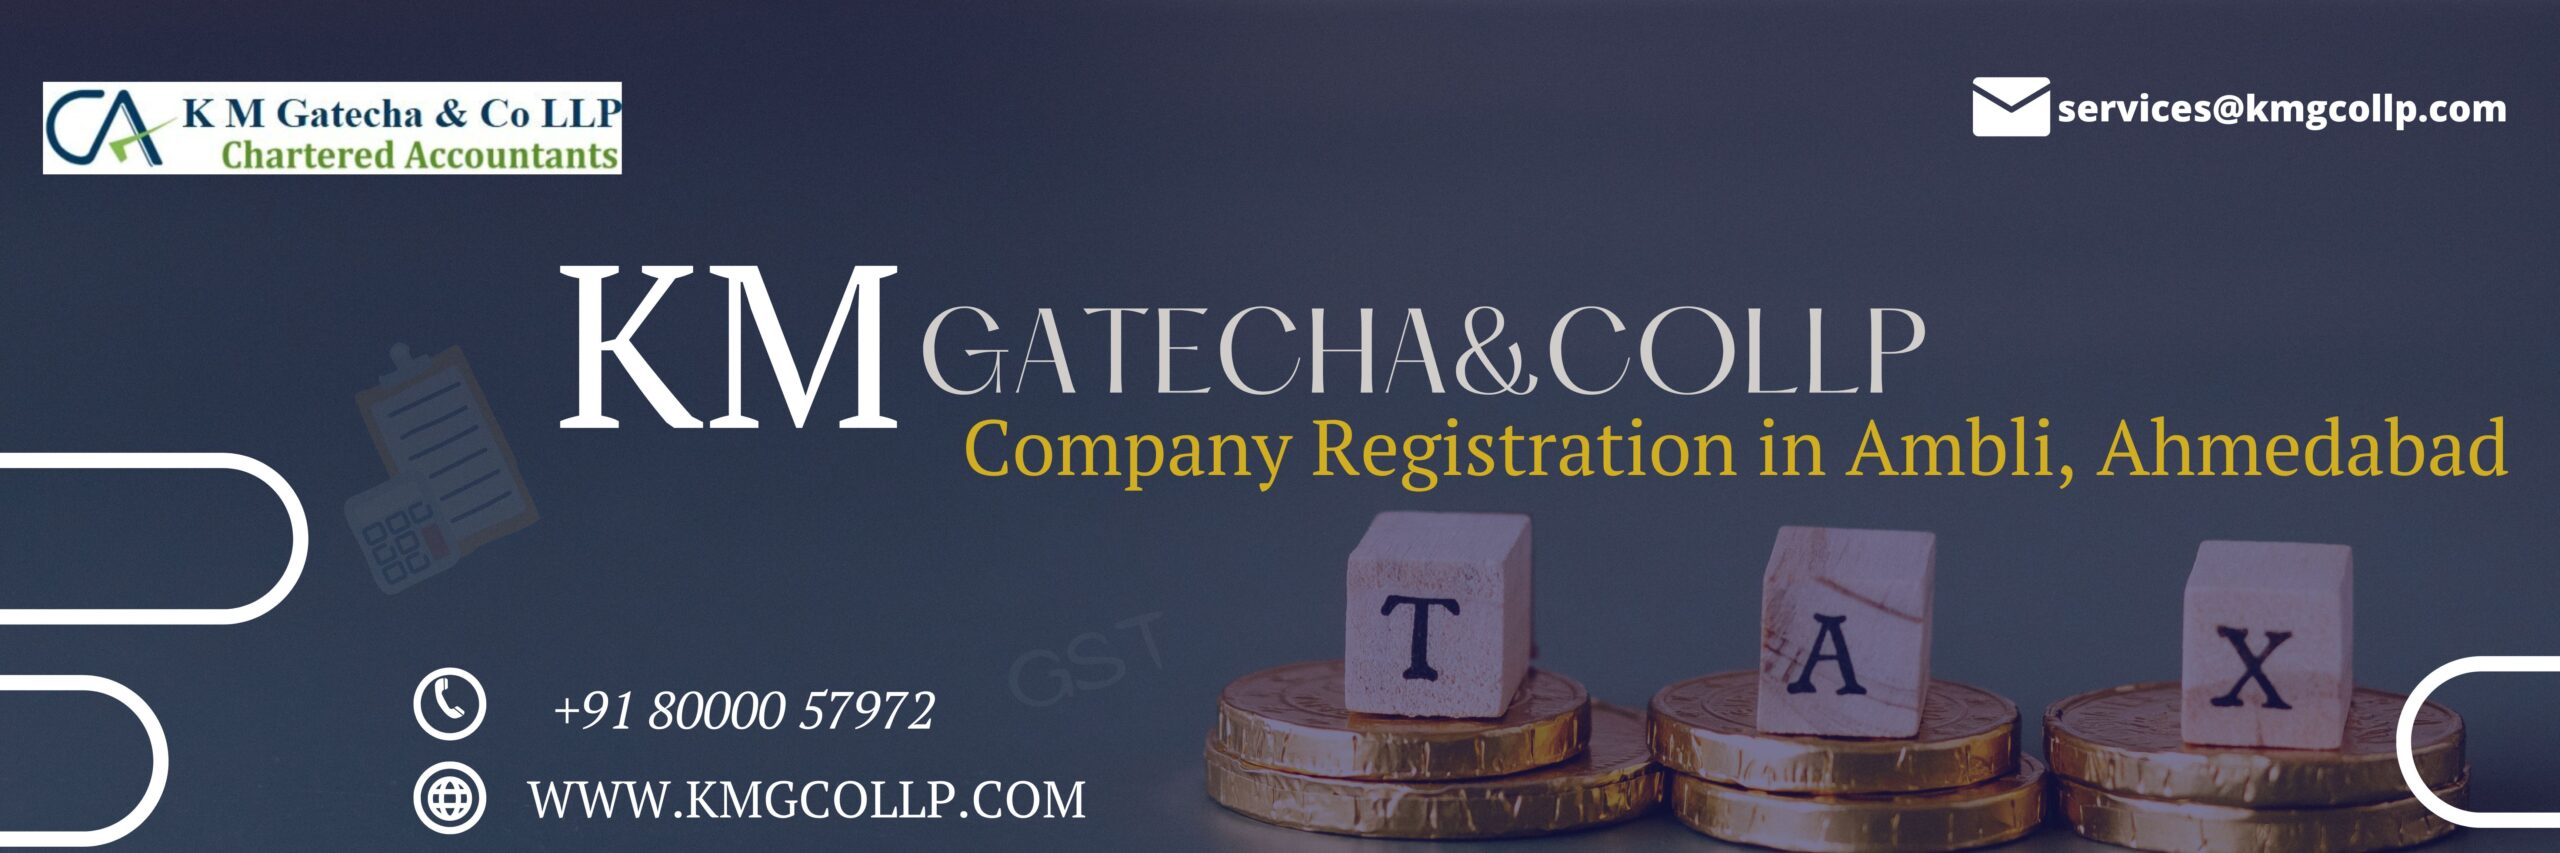 Company Registration in Ambli, Ahmedabad